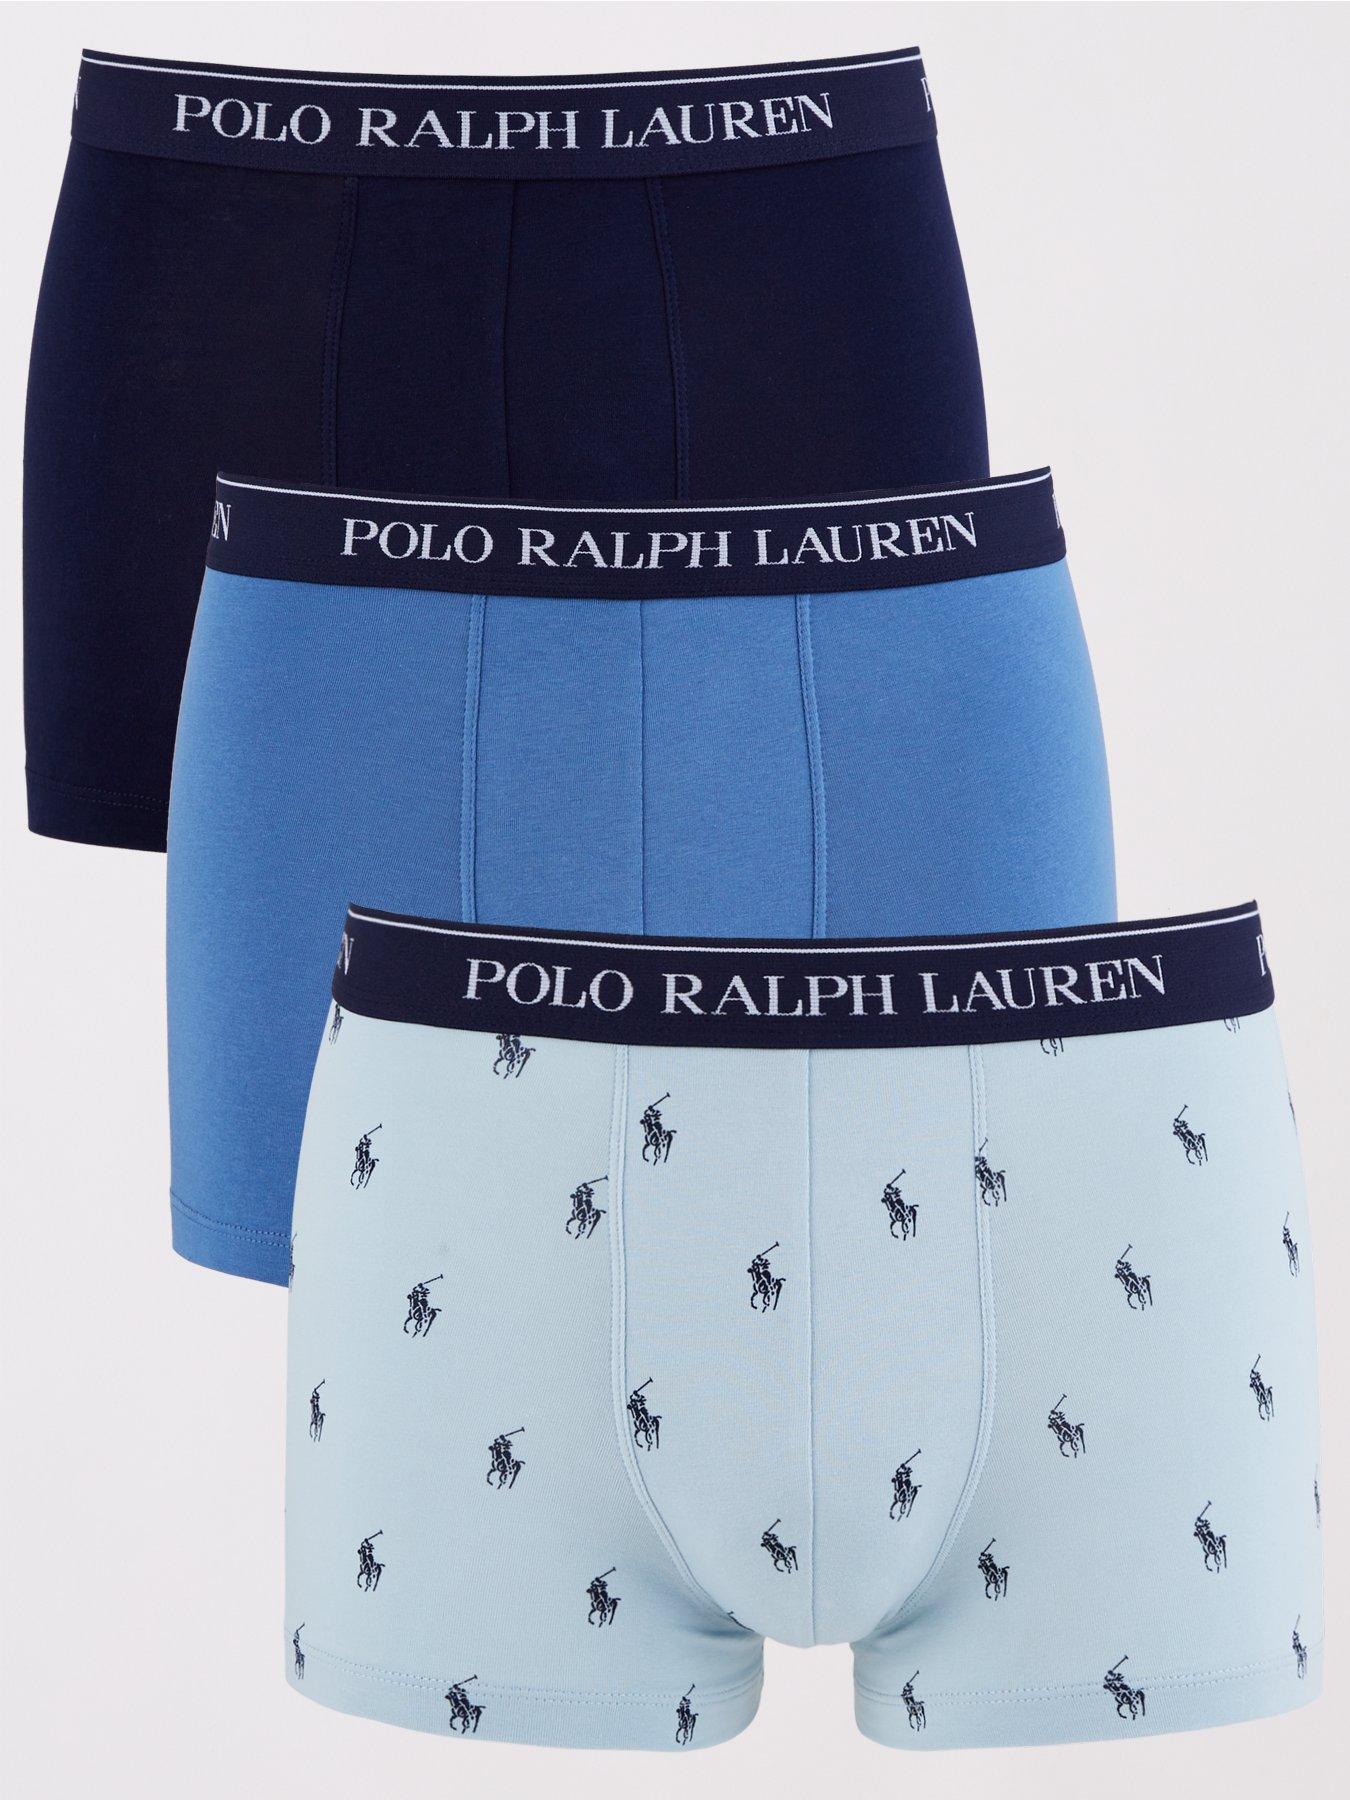 Polo Ralph Lauren Classic 3 Pack Trunks